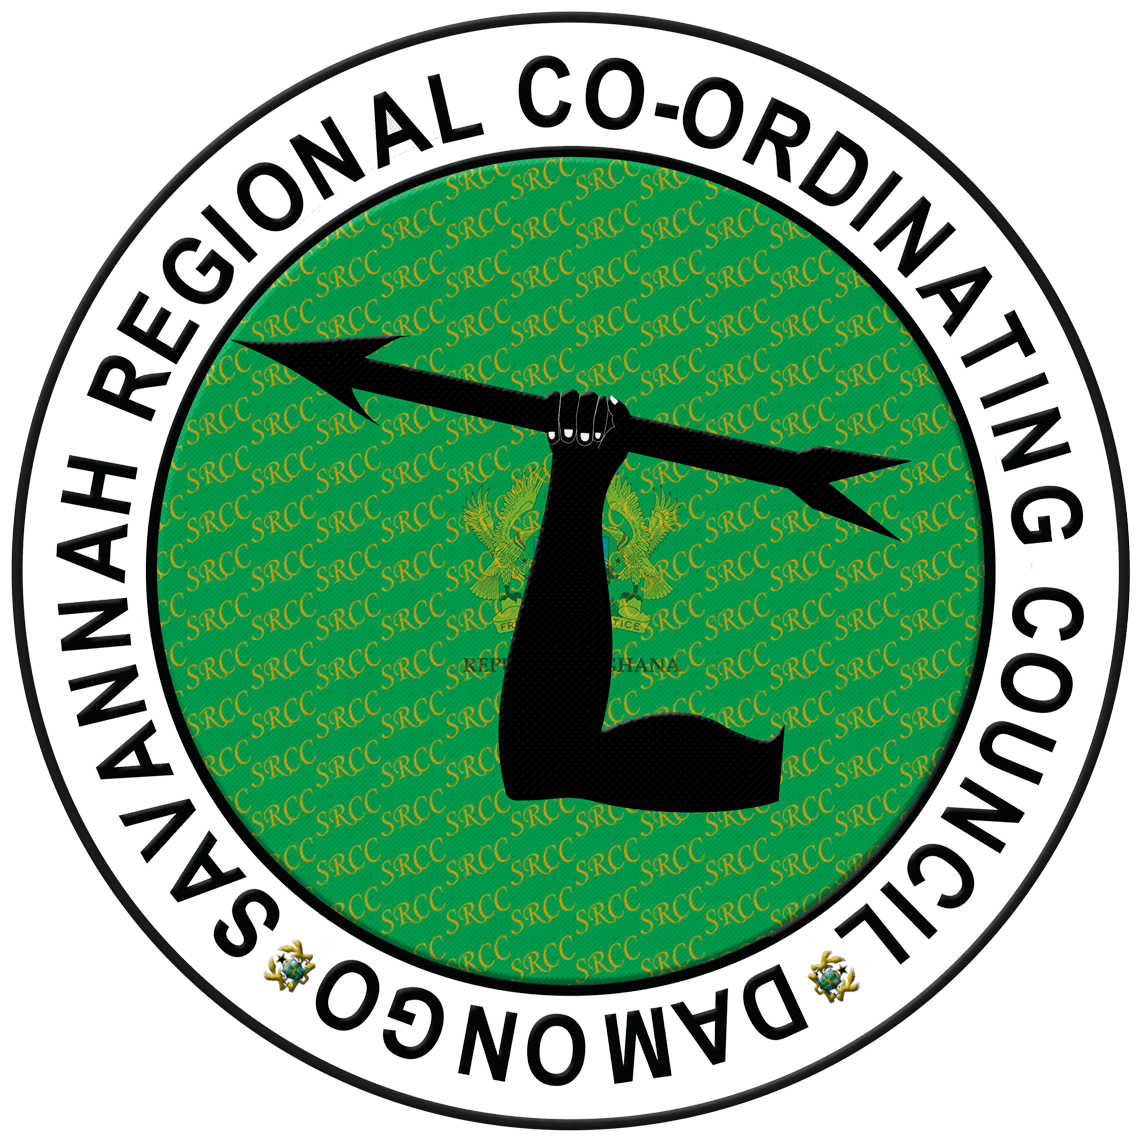 Savannah Regional Co-ordinating Council